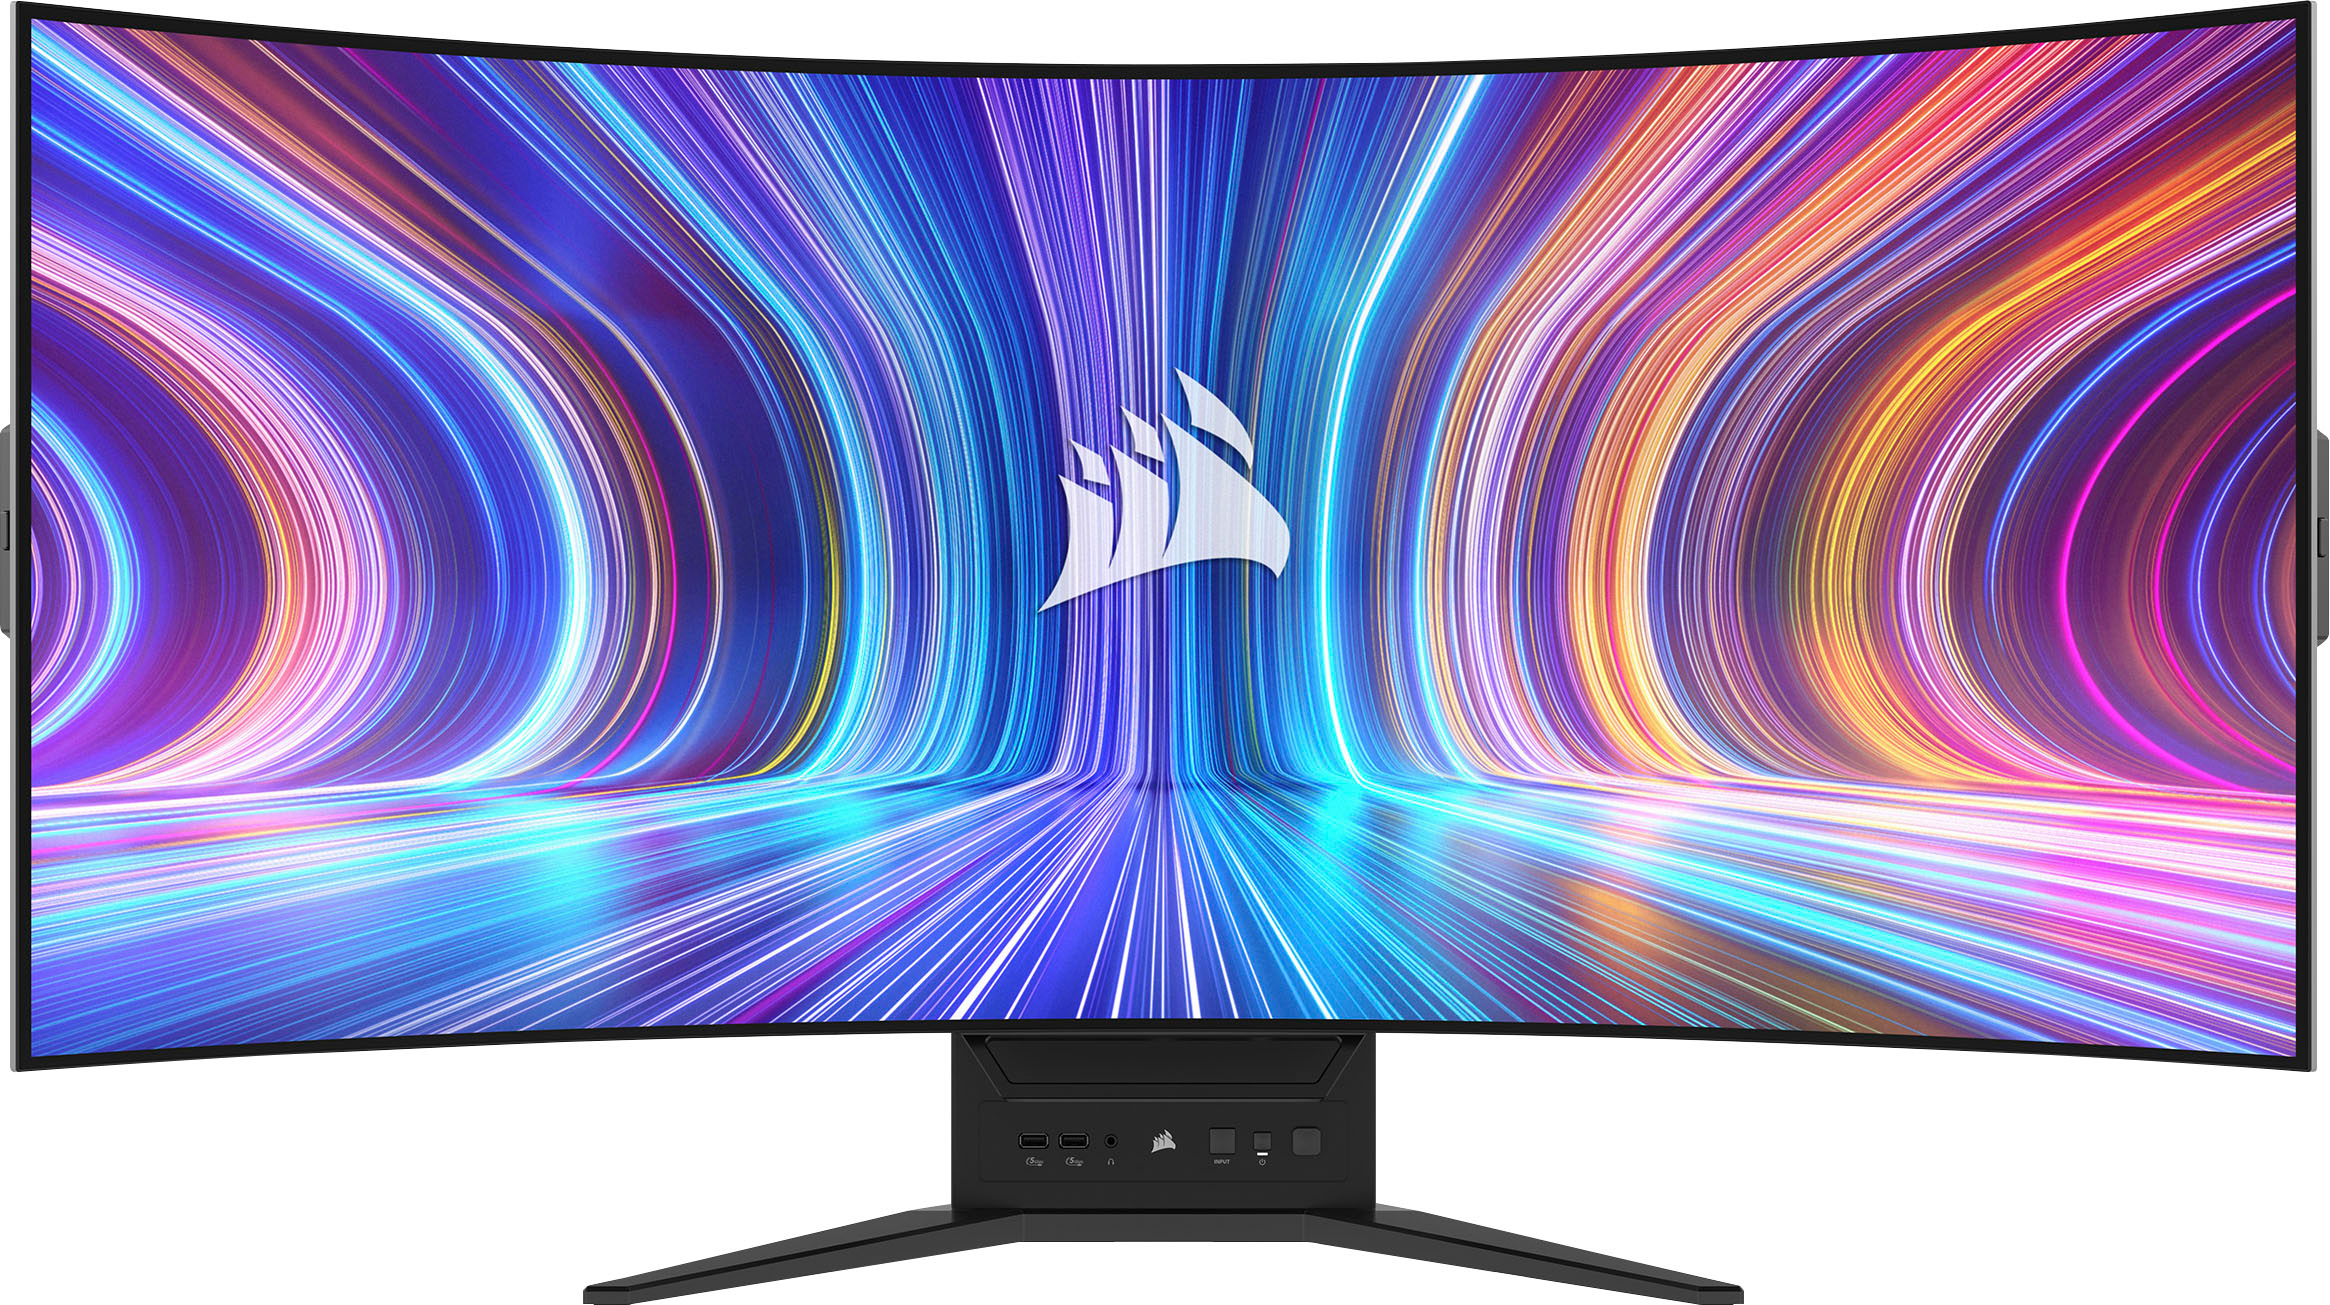 Corsair unveils XENEON gaming monitors: 4K 144Hz + 1440p 240Hz models